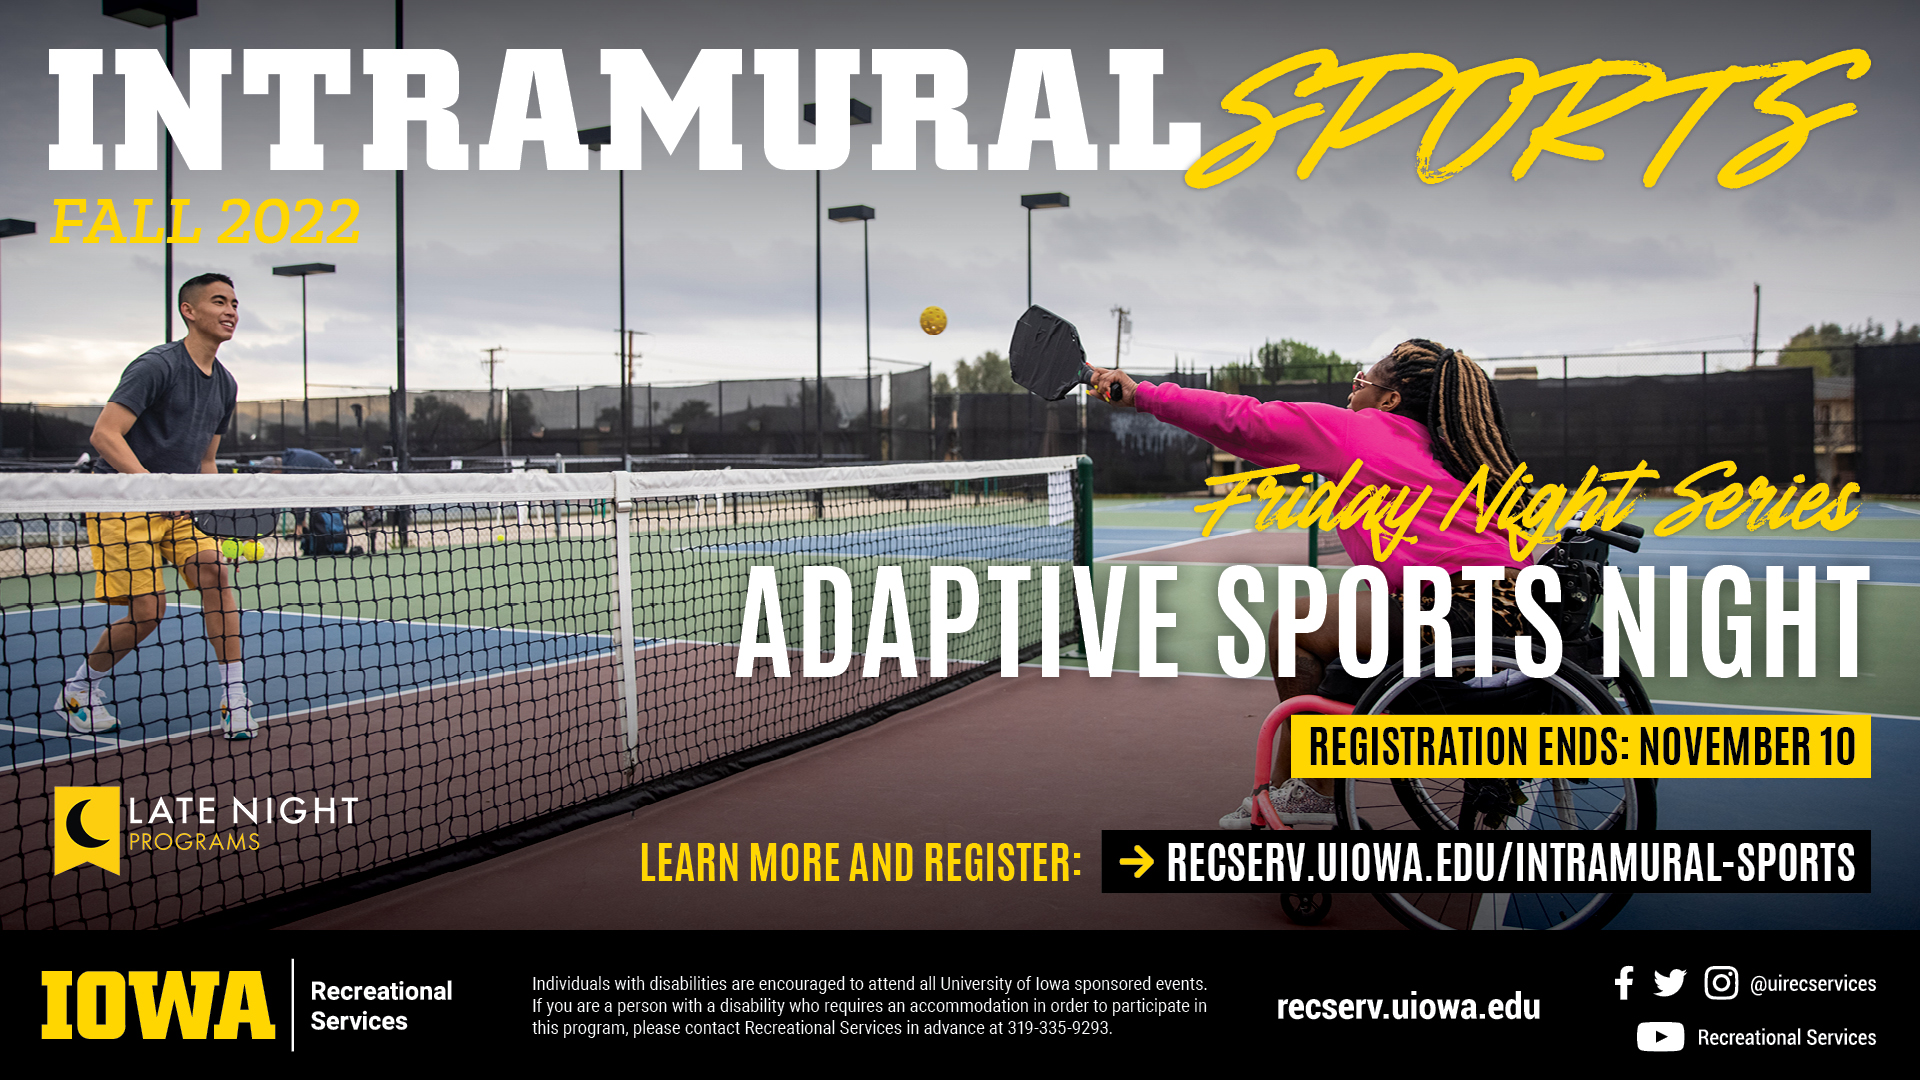 Intramural Sports Fall 2022: Adaptive Sports Night. Learn more and register at reserv.uiowa.edu/intramural-sports